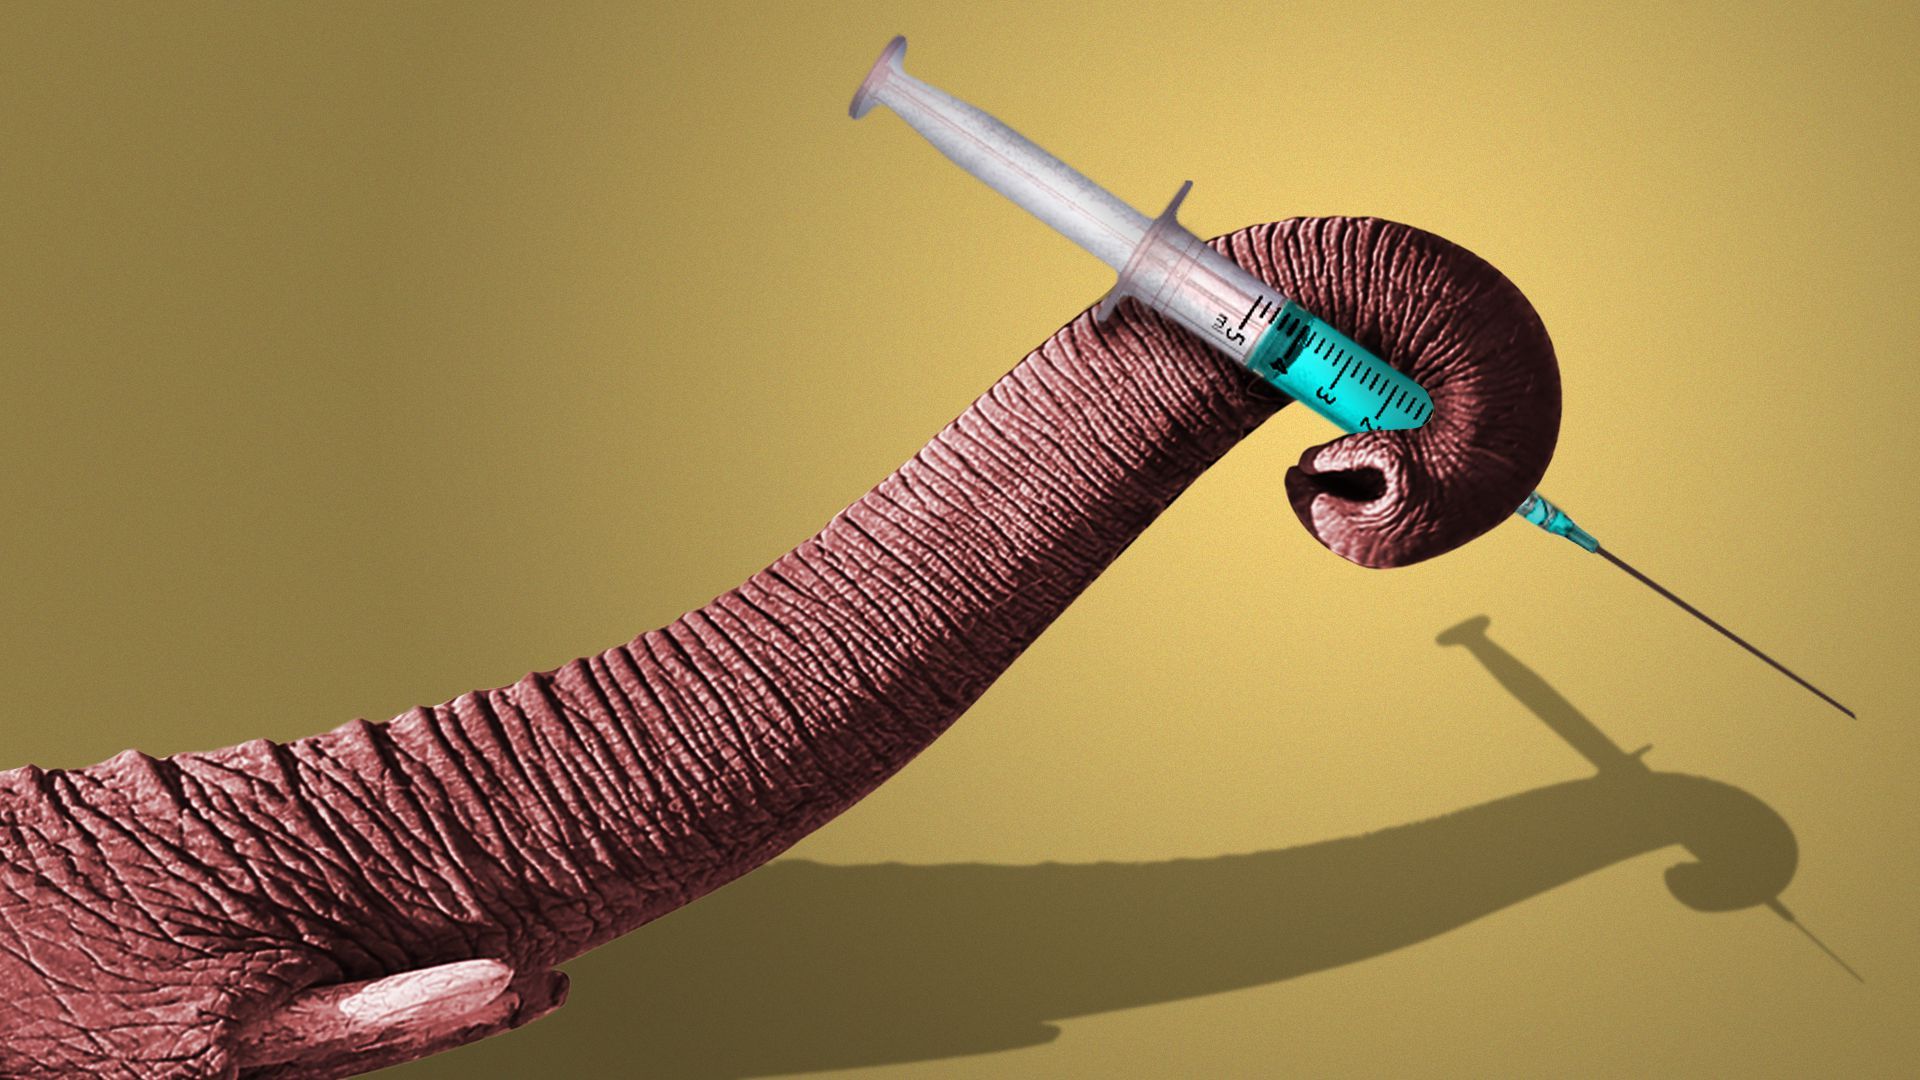 Illustration of an elephant's trunk holding a syringe.